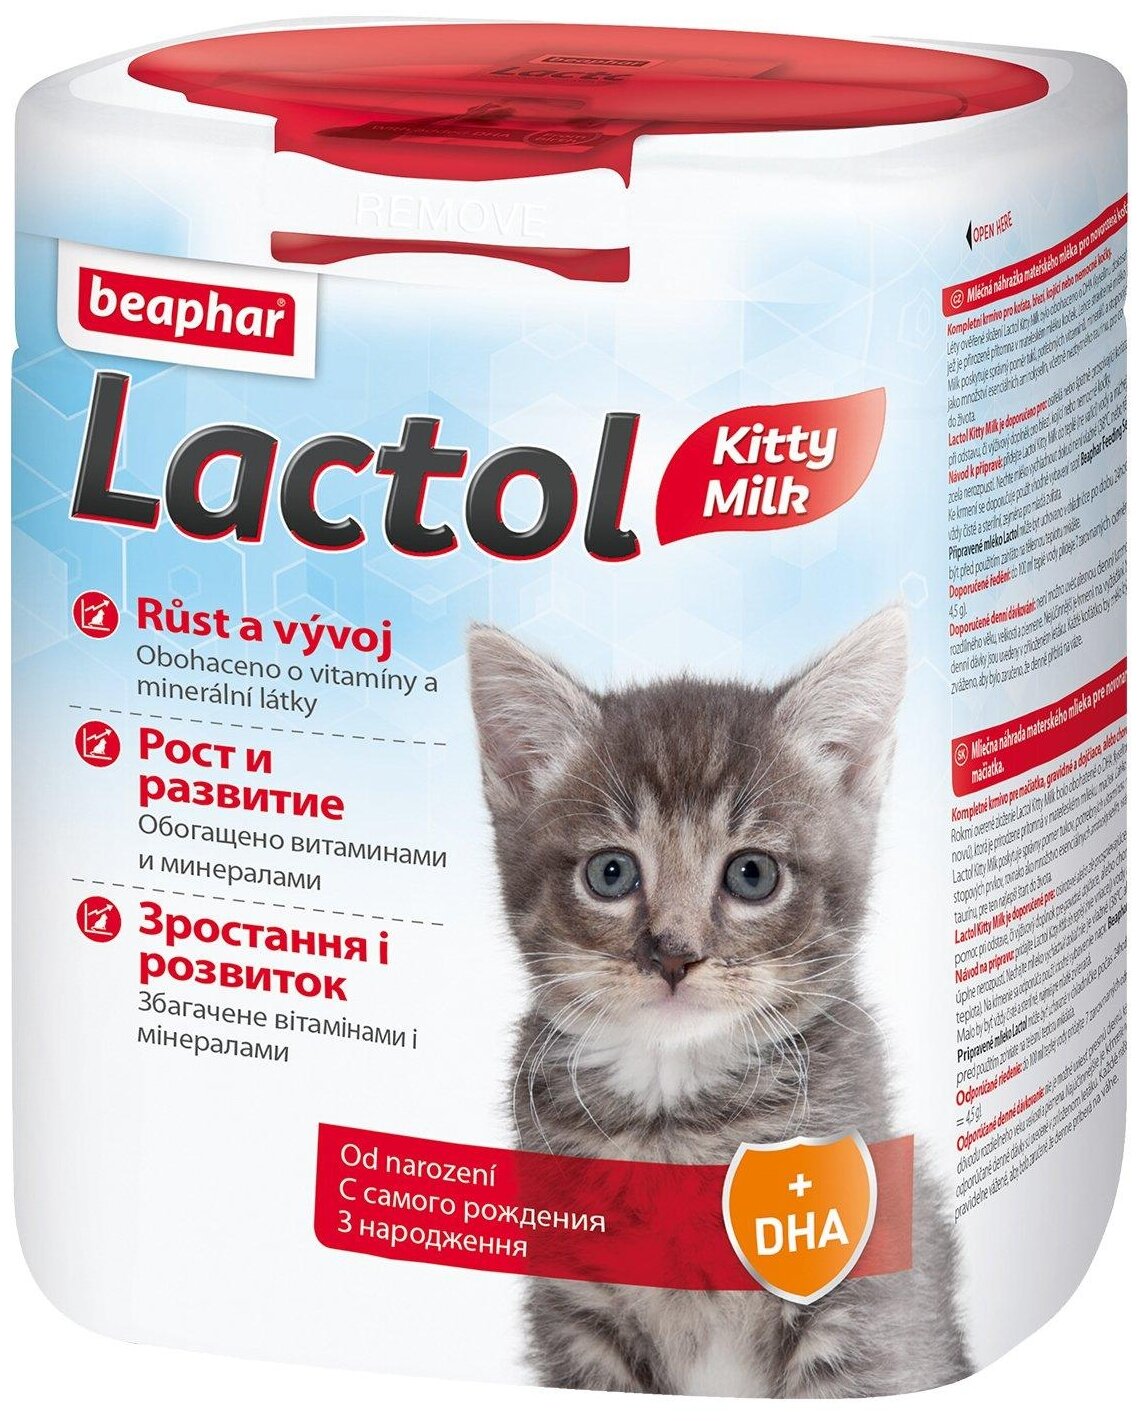 Lactol Kitty Milk молочная смесь для котят, 500 г